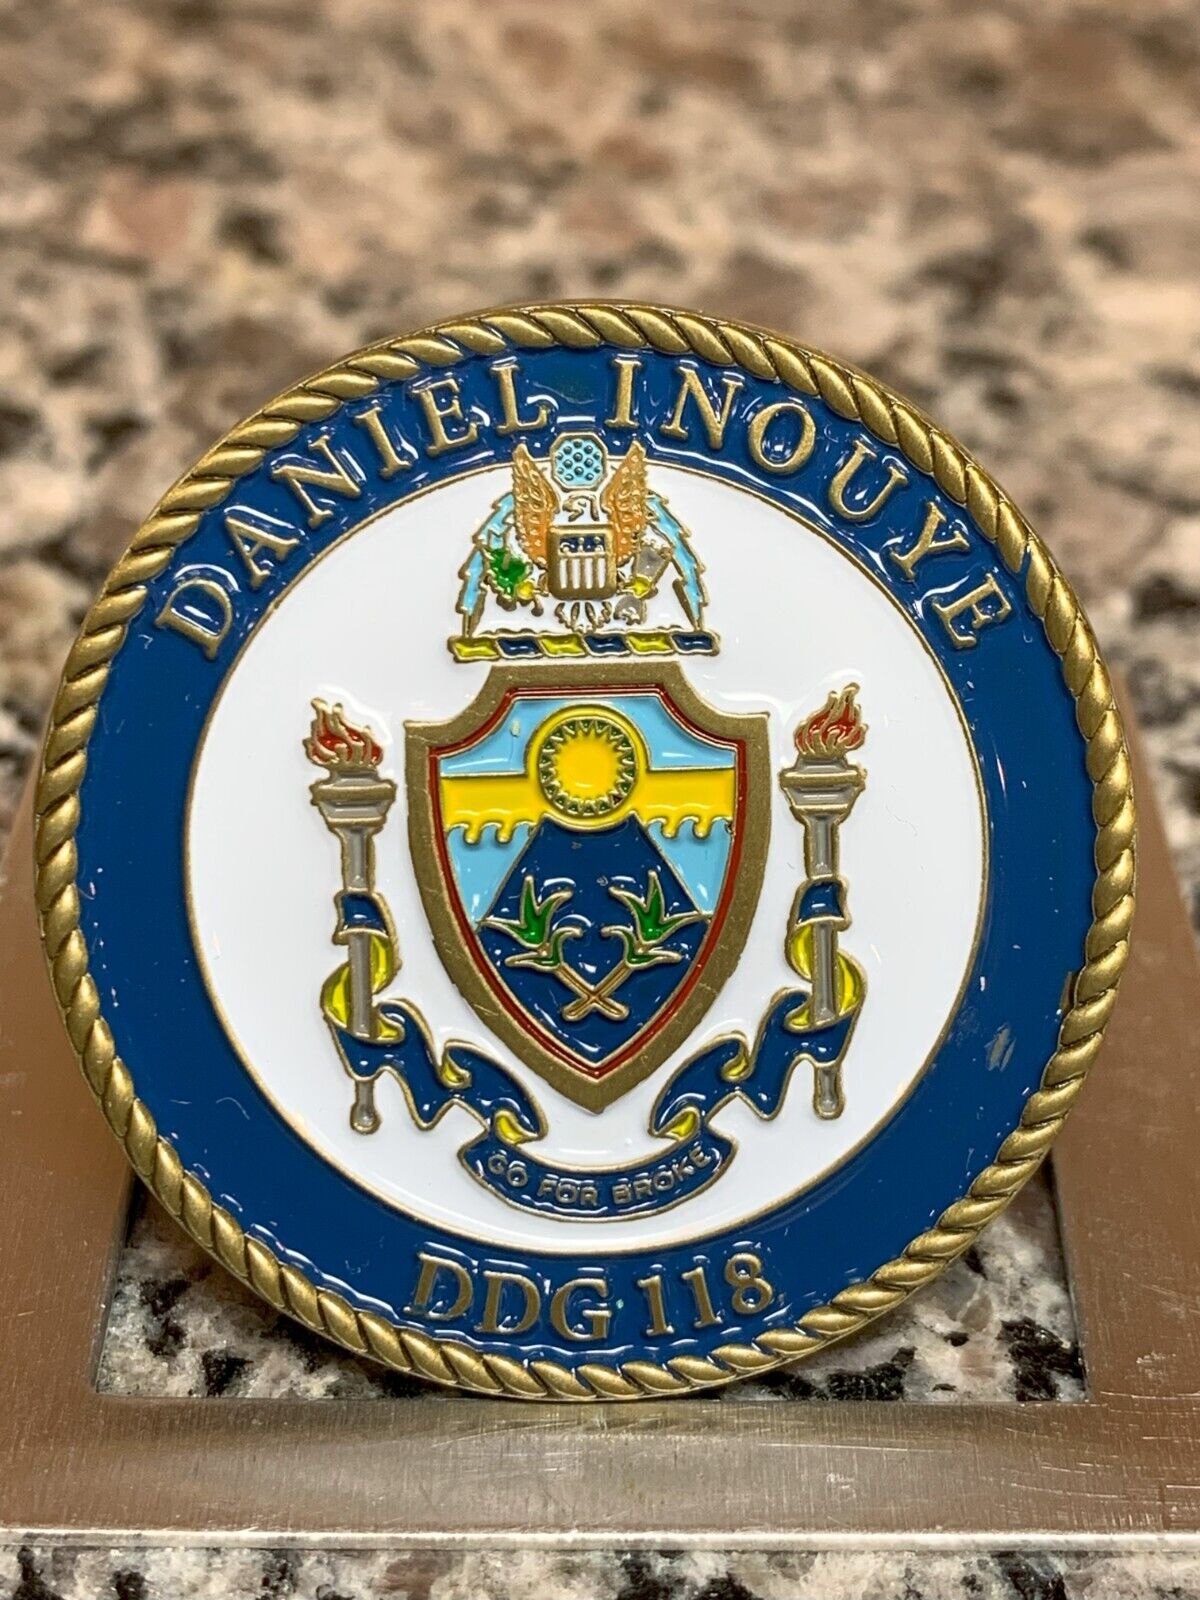 USS Daniel Inouye DDG118 Christening Coin Medal June 22, 2019 Bath Maine